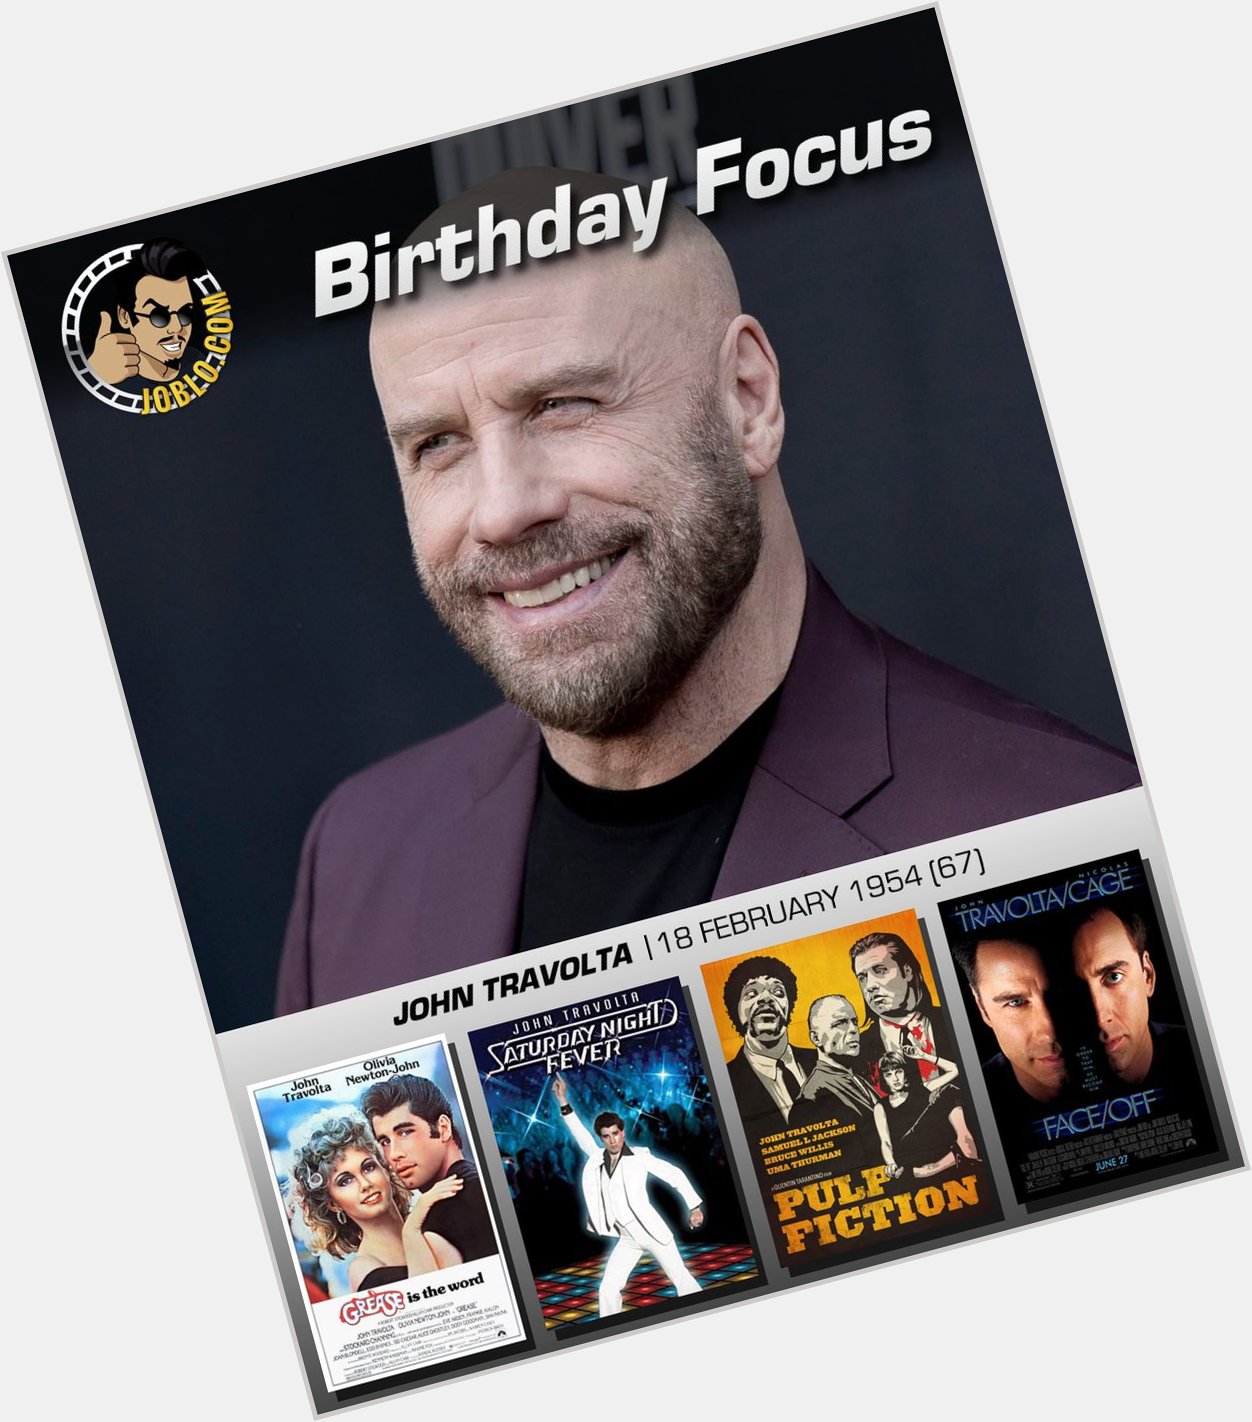 Wishing John Travolta a very happy 67th birthday! 